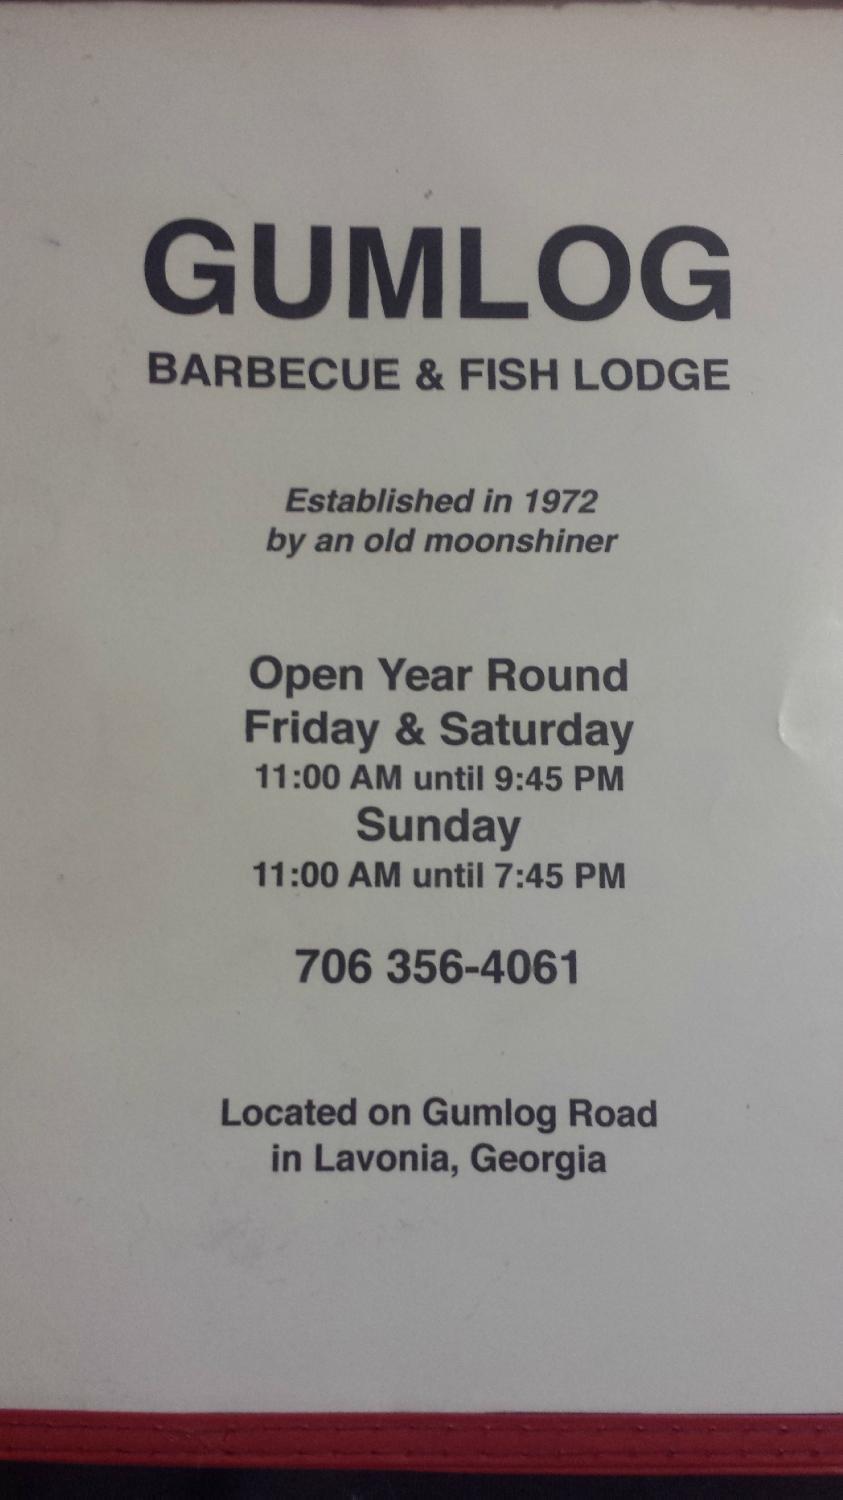 Gumlog Barbecue & Fish Lodge